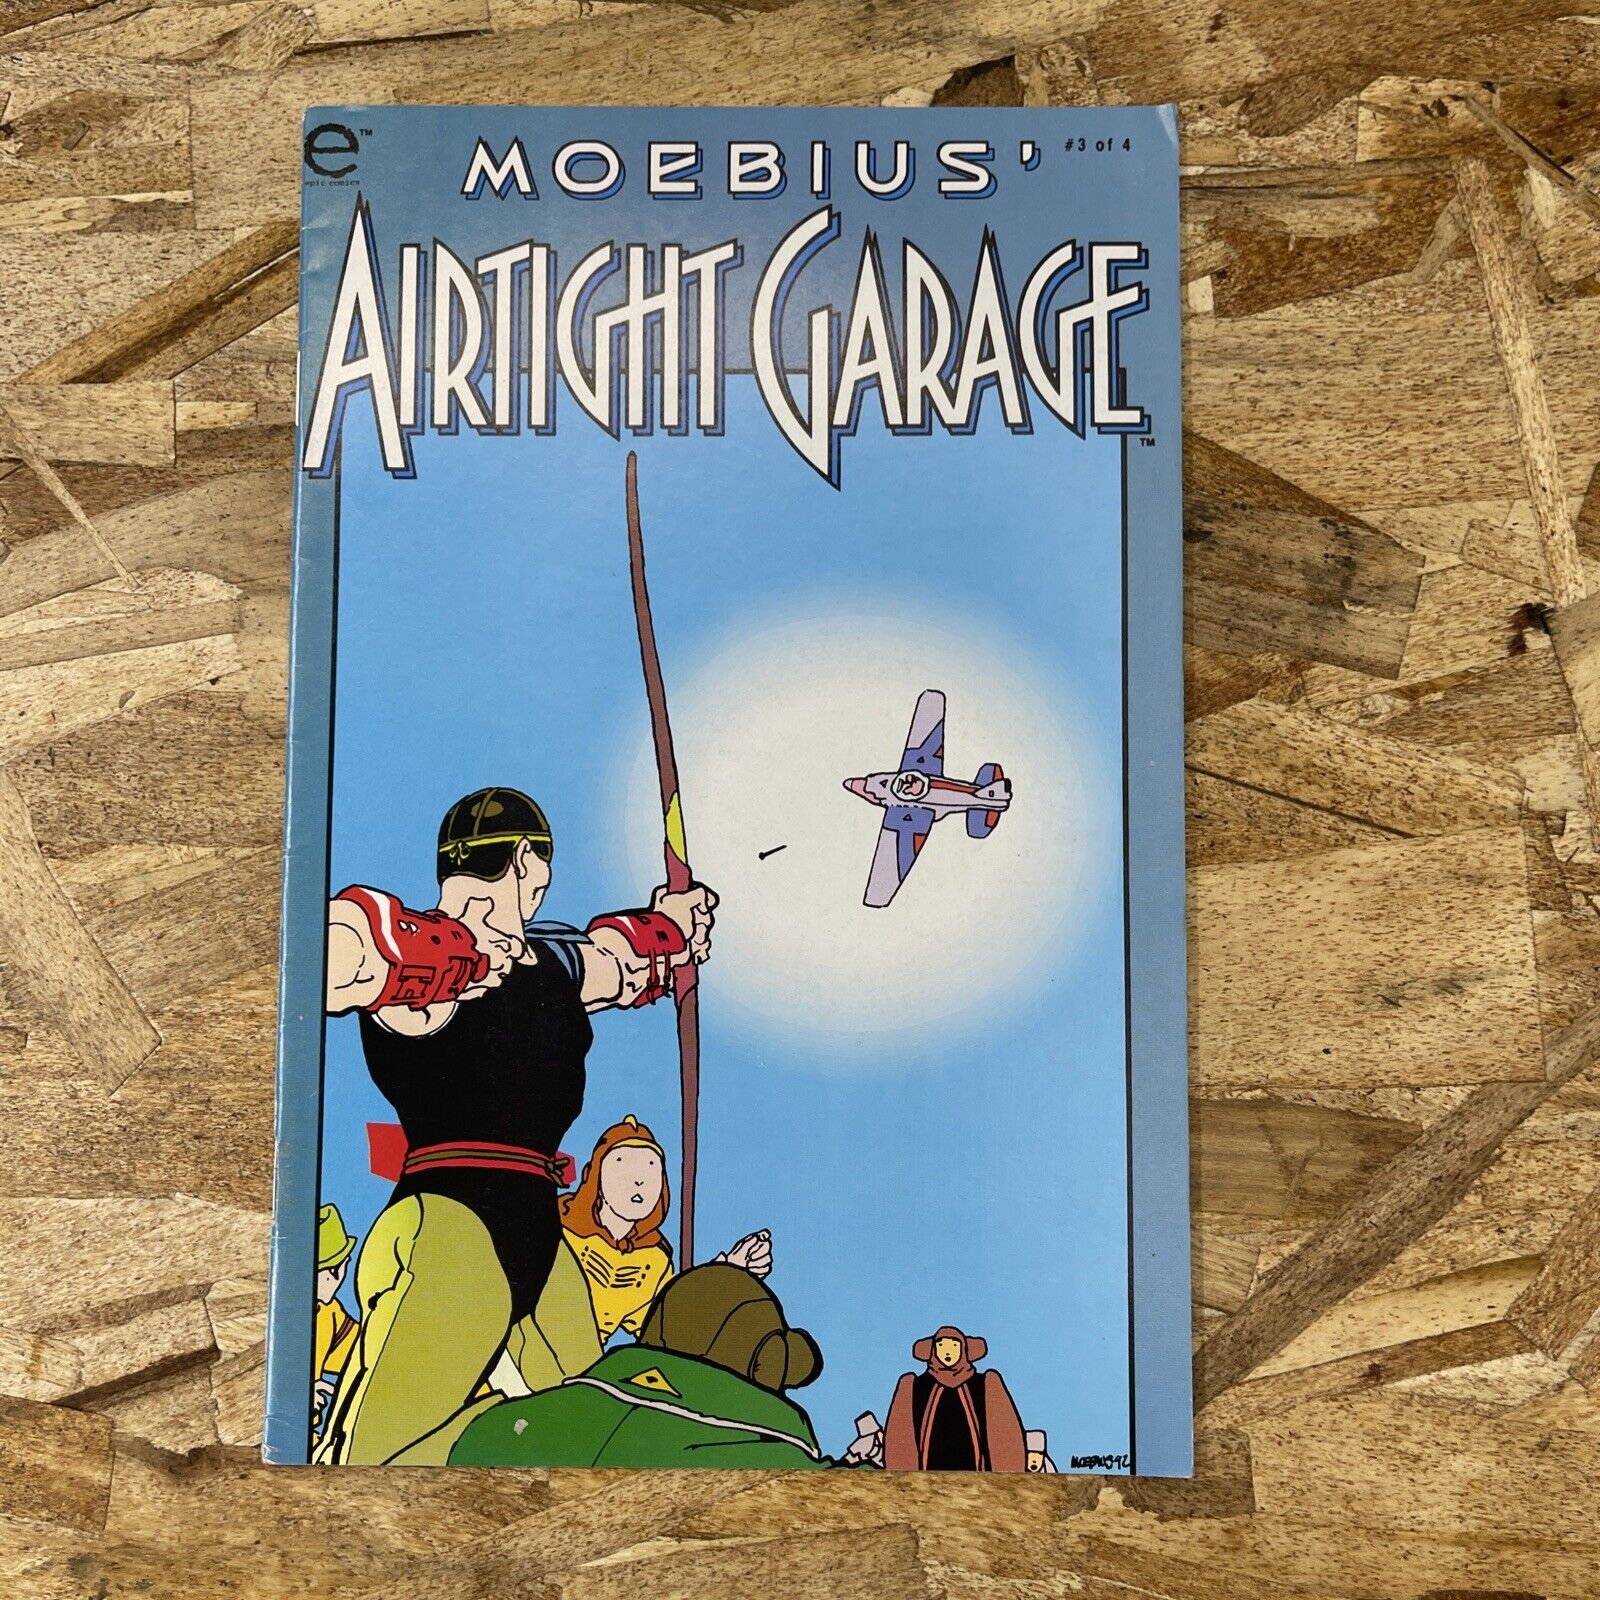 1993 Epic Comics Moebius' Airtight Garage Issue Volume 1 #3 of 4 not graded